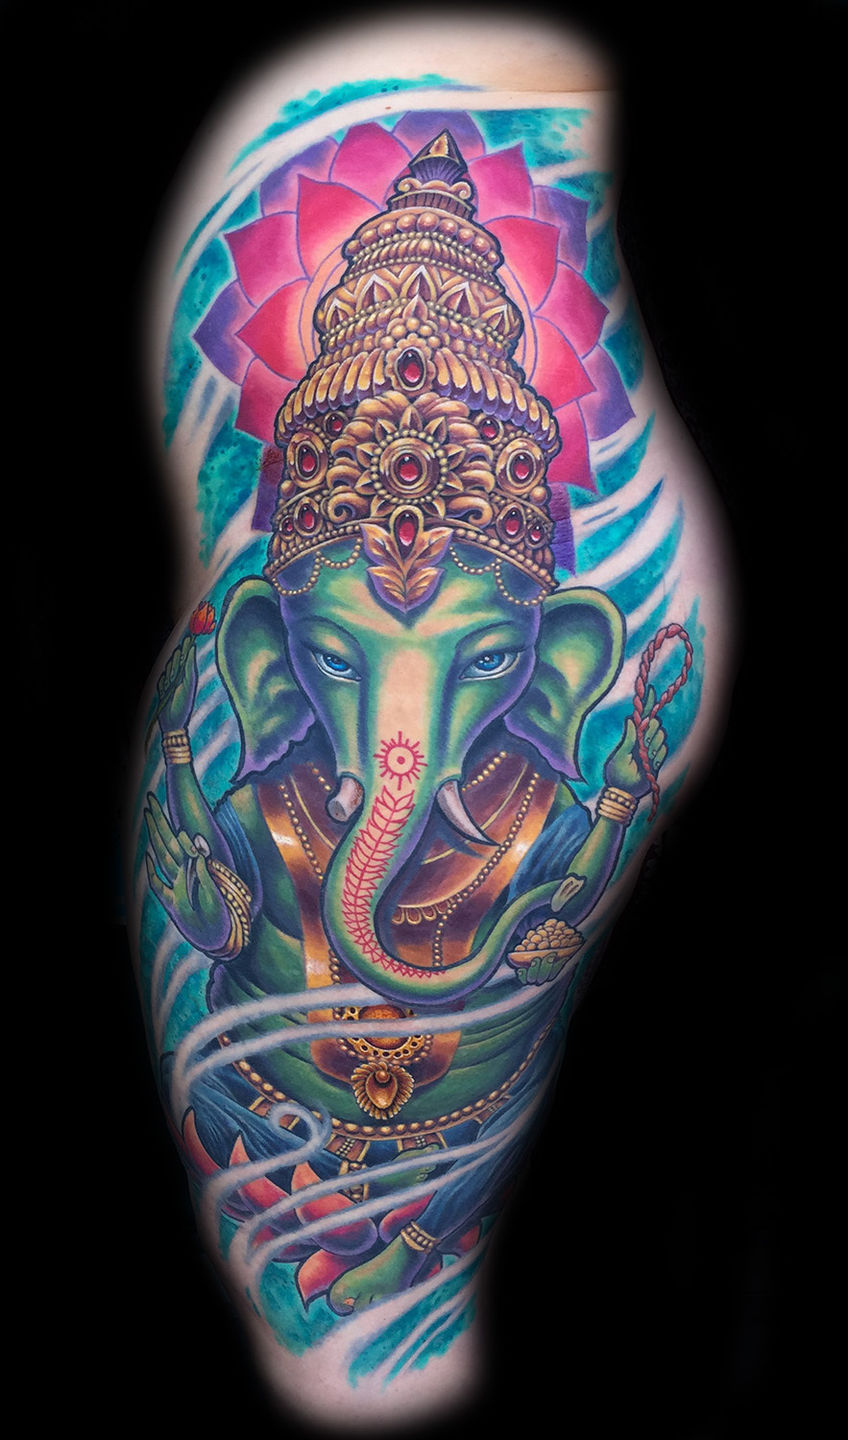 Best-las-vegas-tattoo-artists-shops-joe-riley-inner-visions-tattoo-ganesh-tattoos-elephant